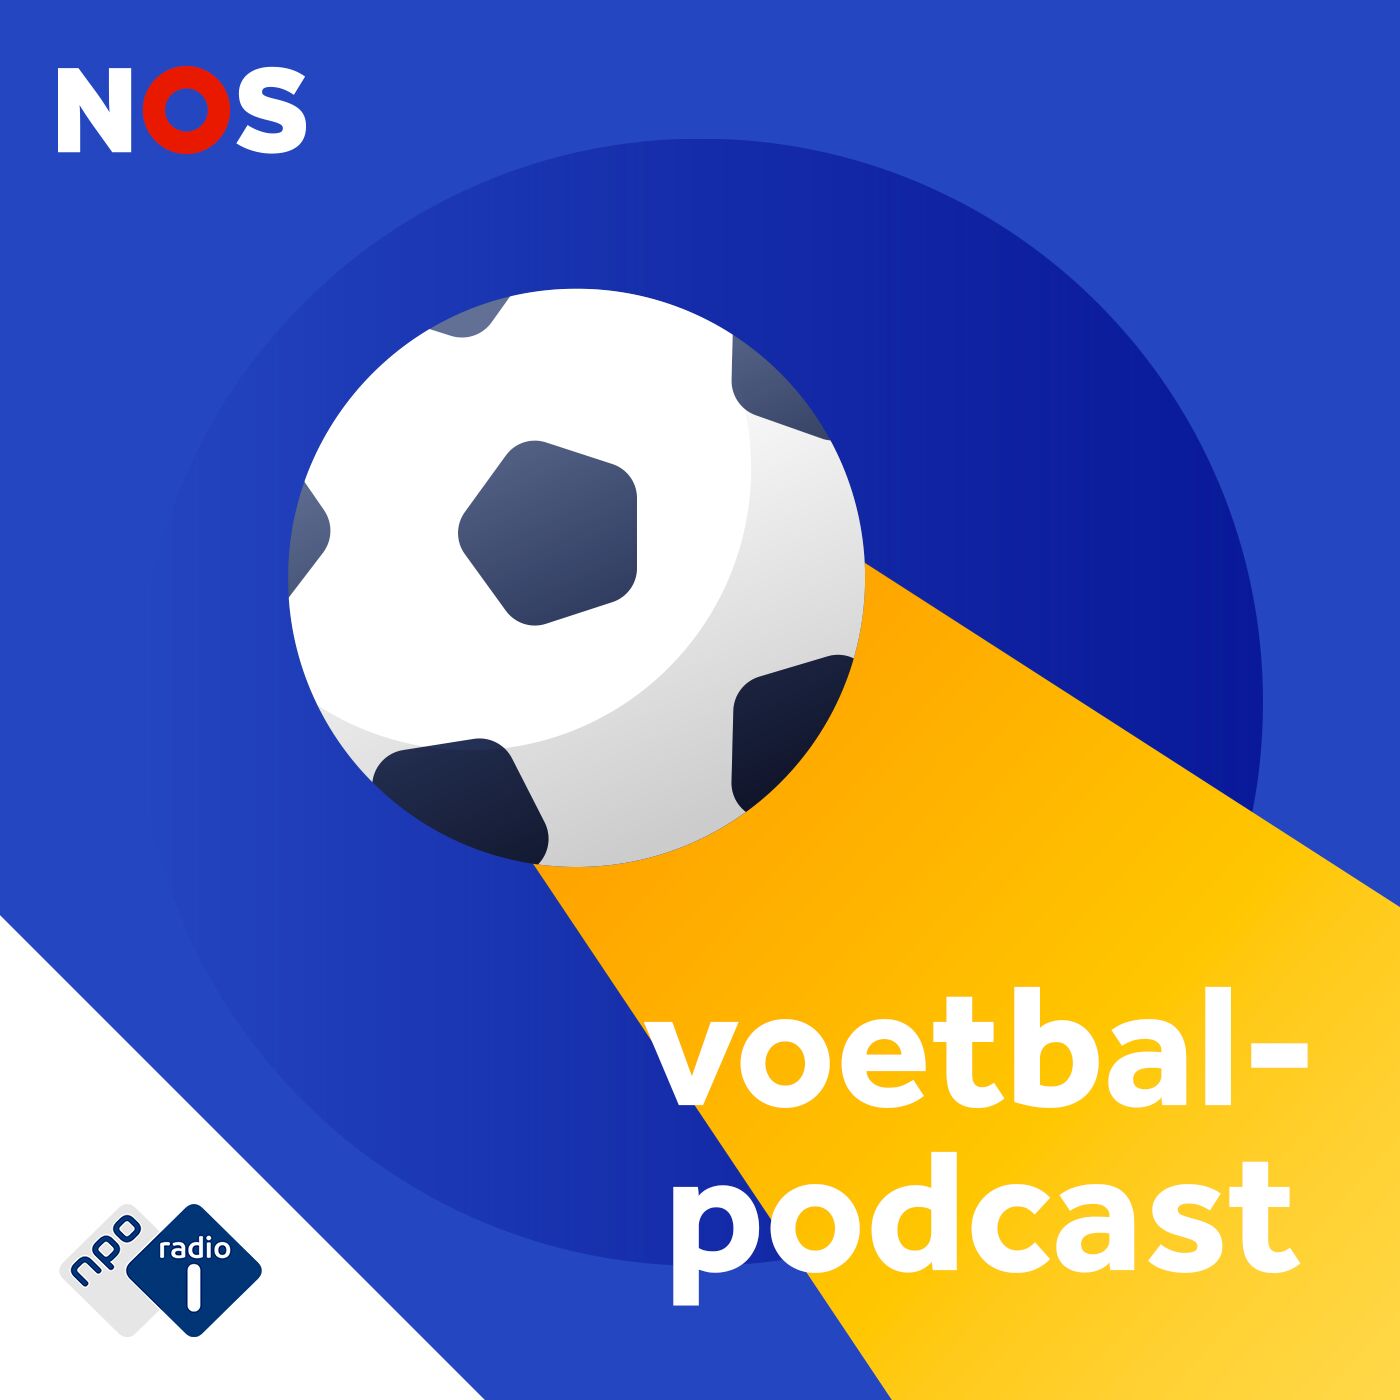 NOS Voetbalpodcast logo